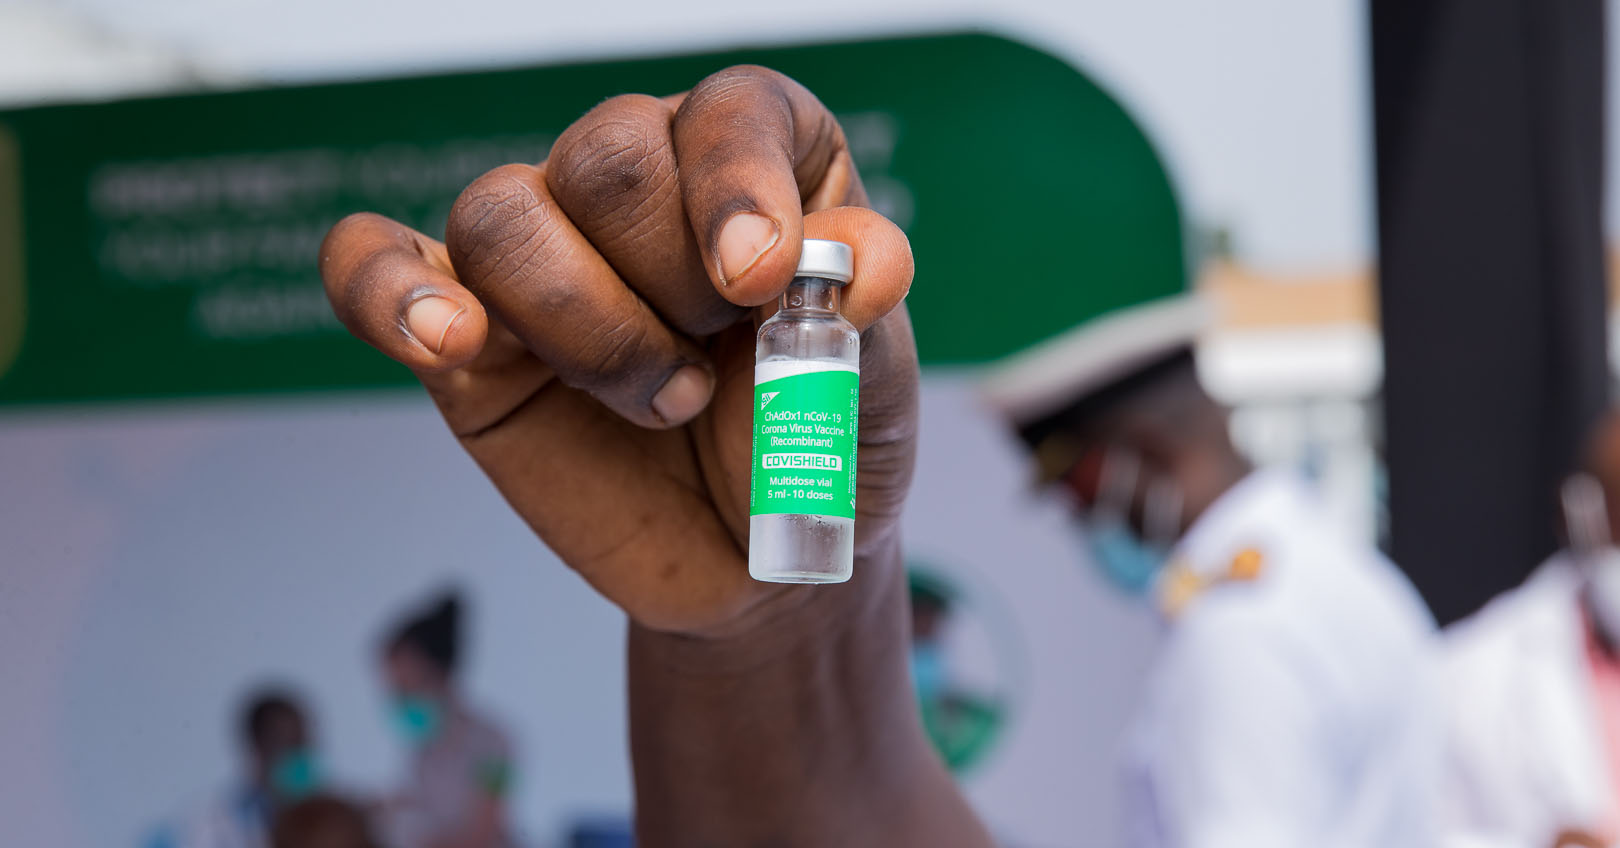 Person's hand holding up a glass vial of Covishield Corona Virus vaccine